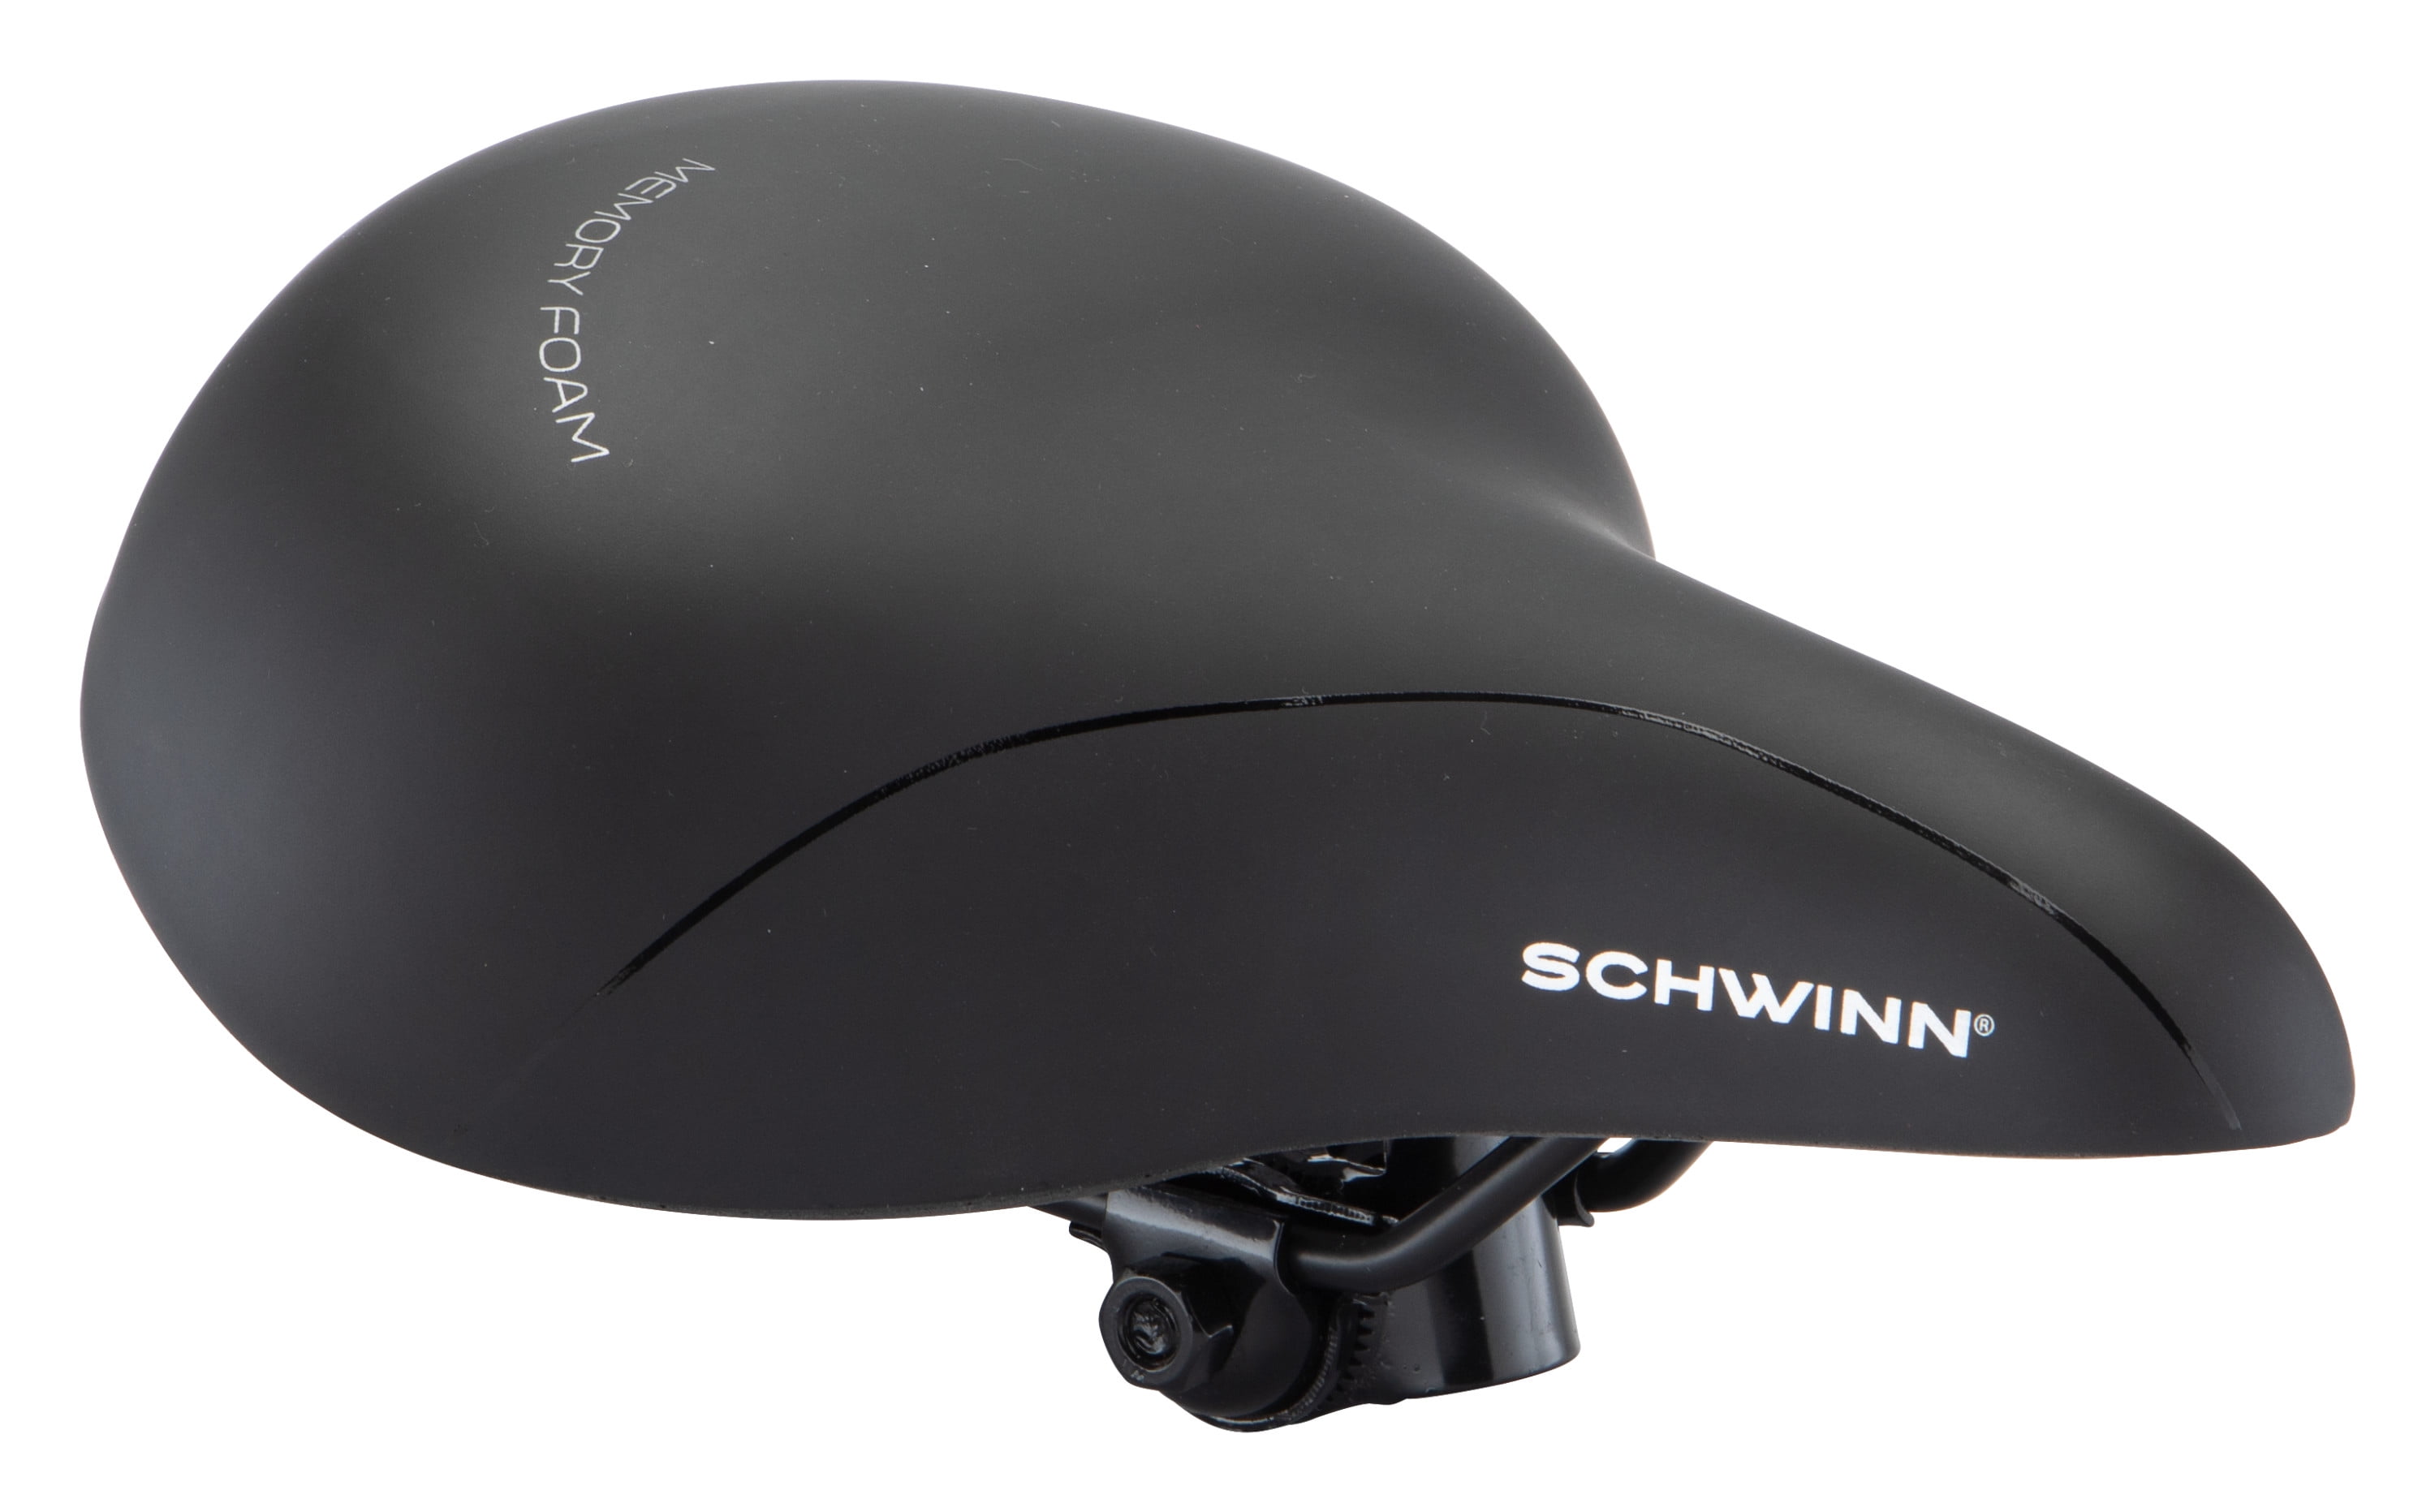 Schwinn No Pressure Bicycle Seat Ergonomic Comfort Padded Durable Bike Saddle